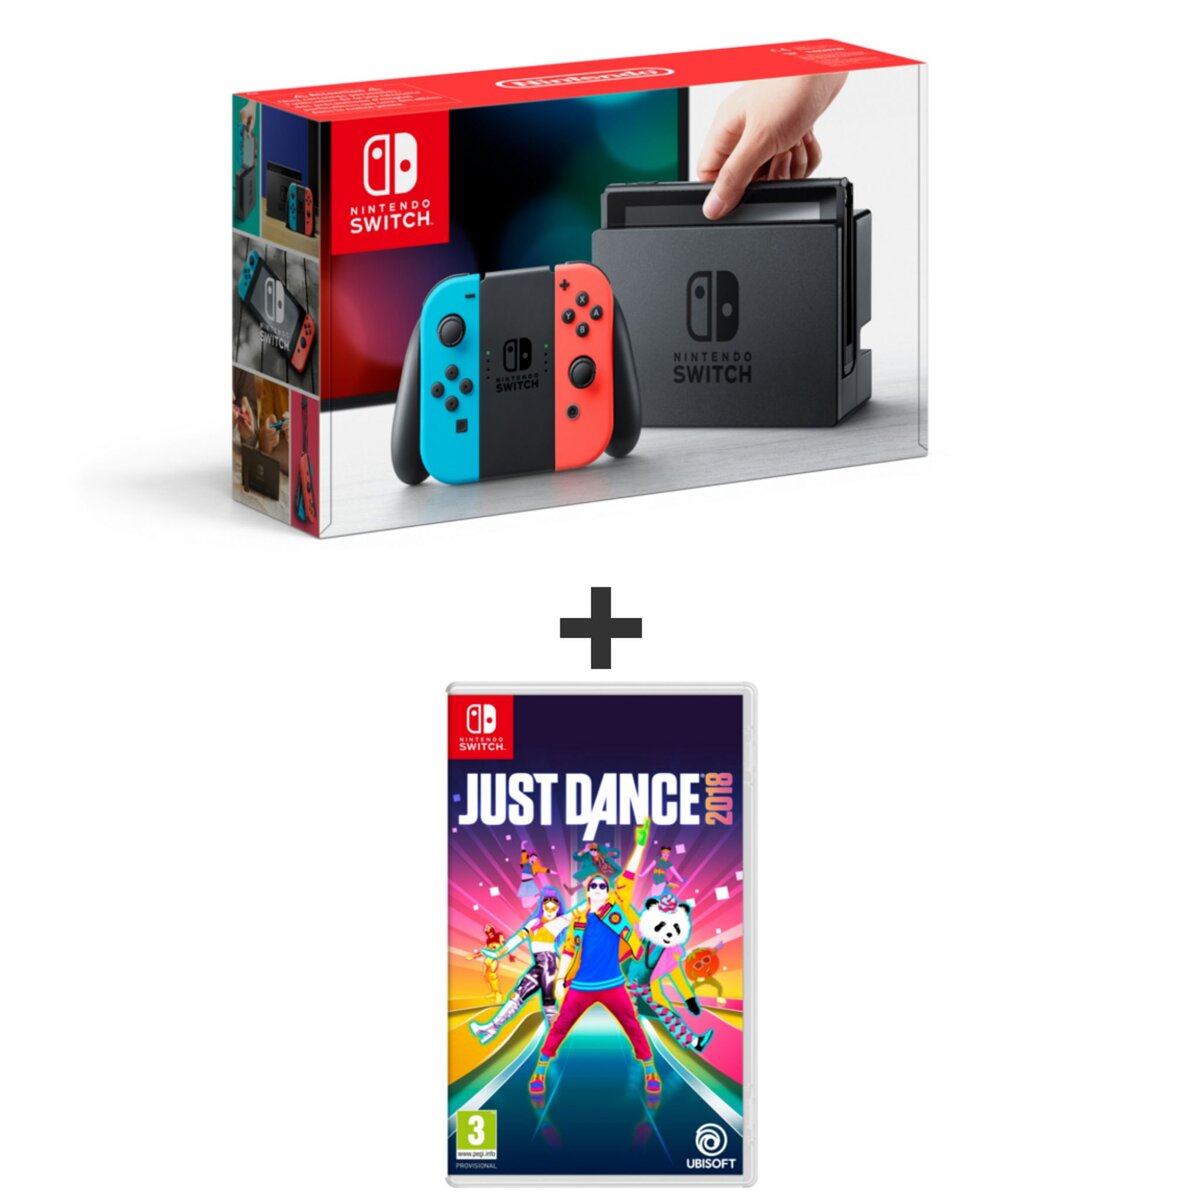 Console Nintendo Switch néon + Just Dance 2018